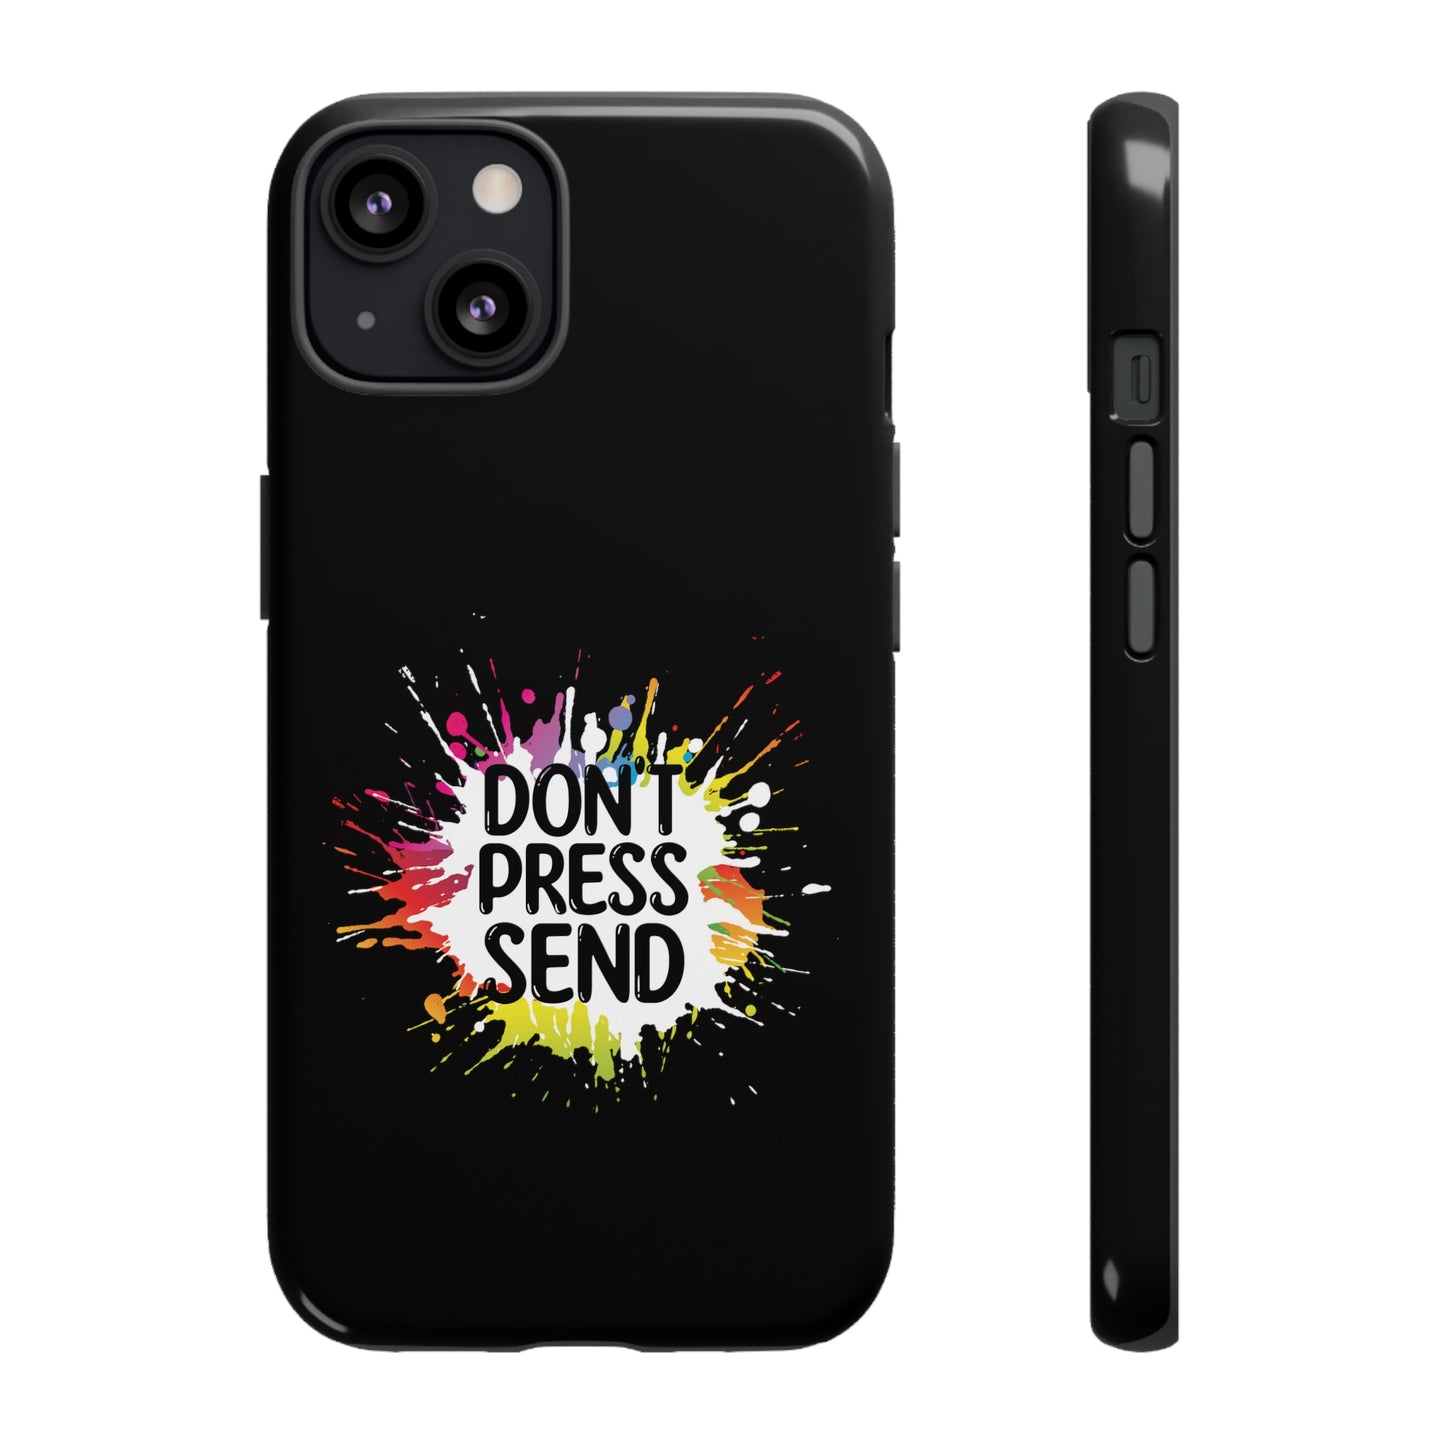 Tough Cases - Don't Press Send version 2 - Black - iPhone / Pixel / Galaxy